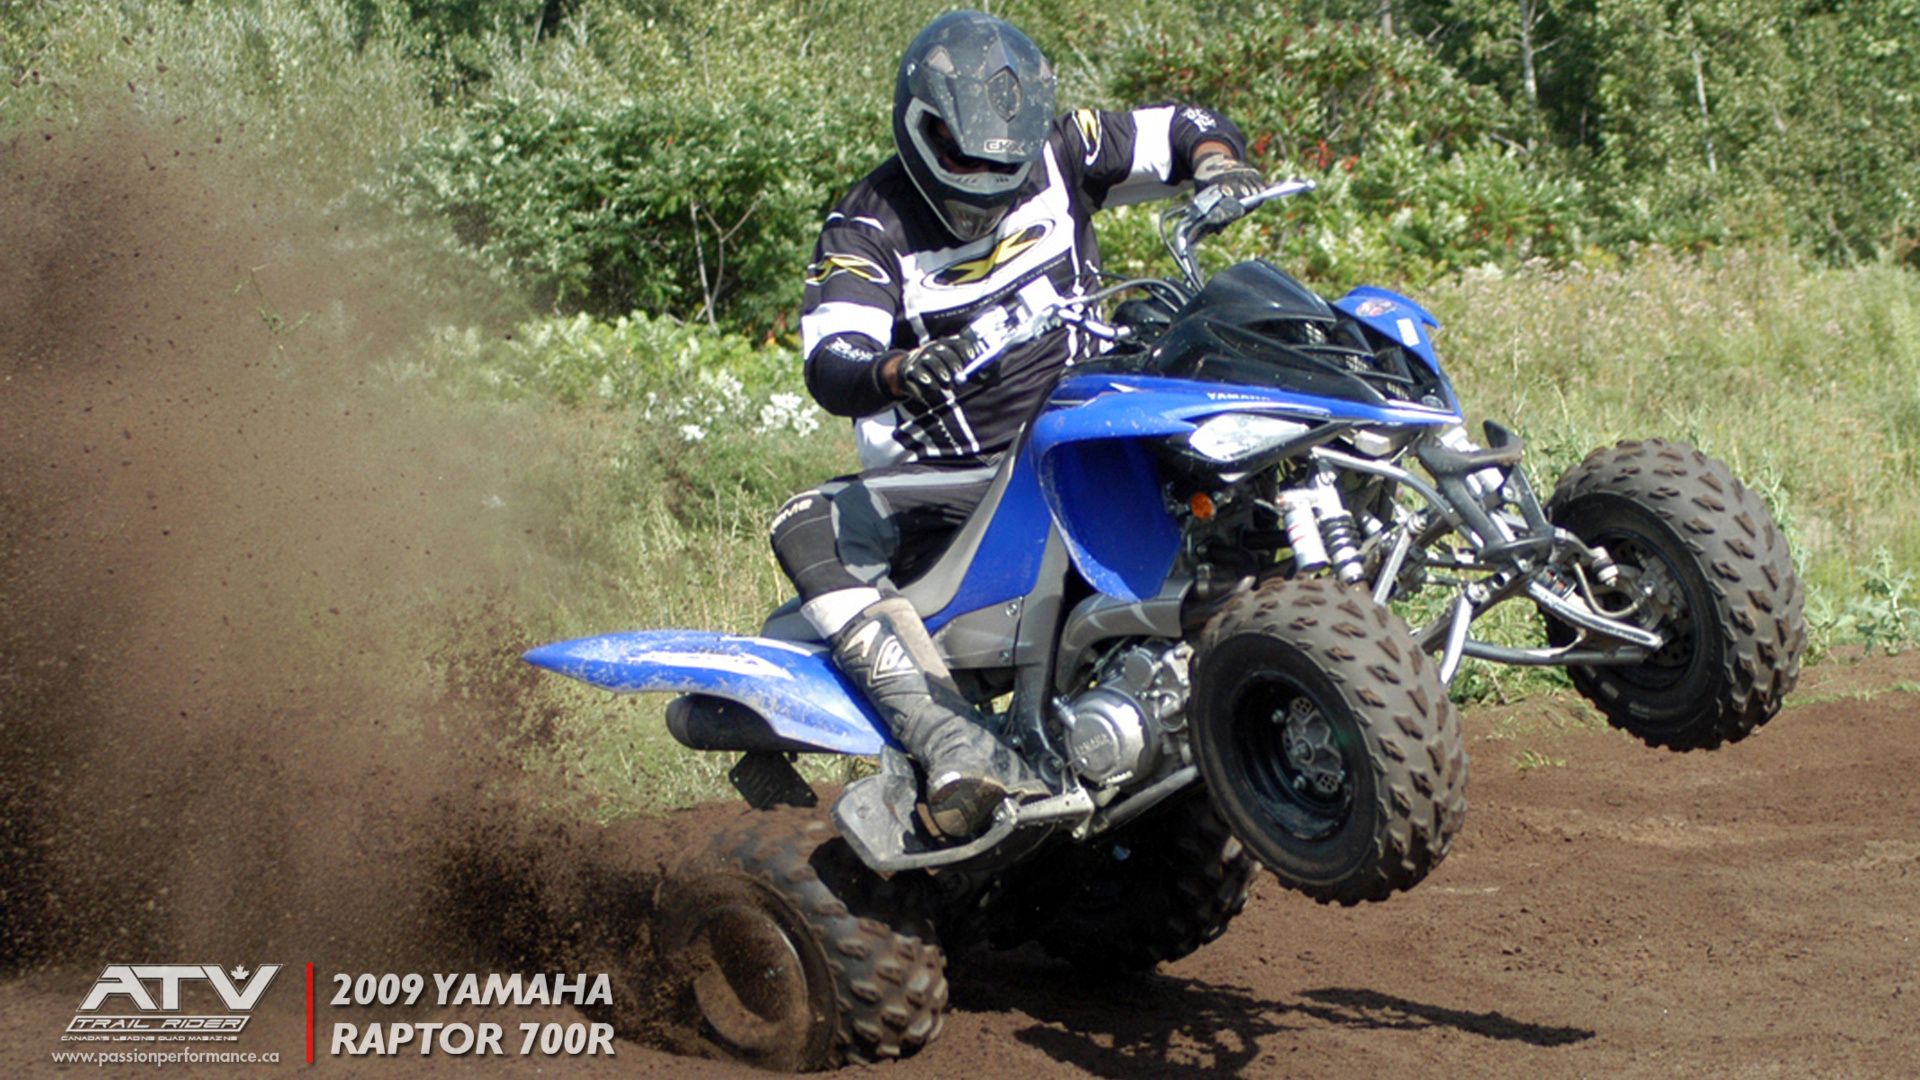 Wallpapers - 2009 Yamaha Raptor - ATV Trail Rider